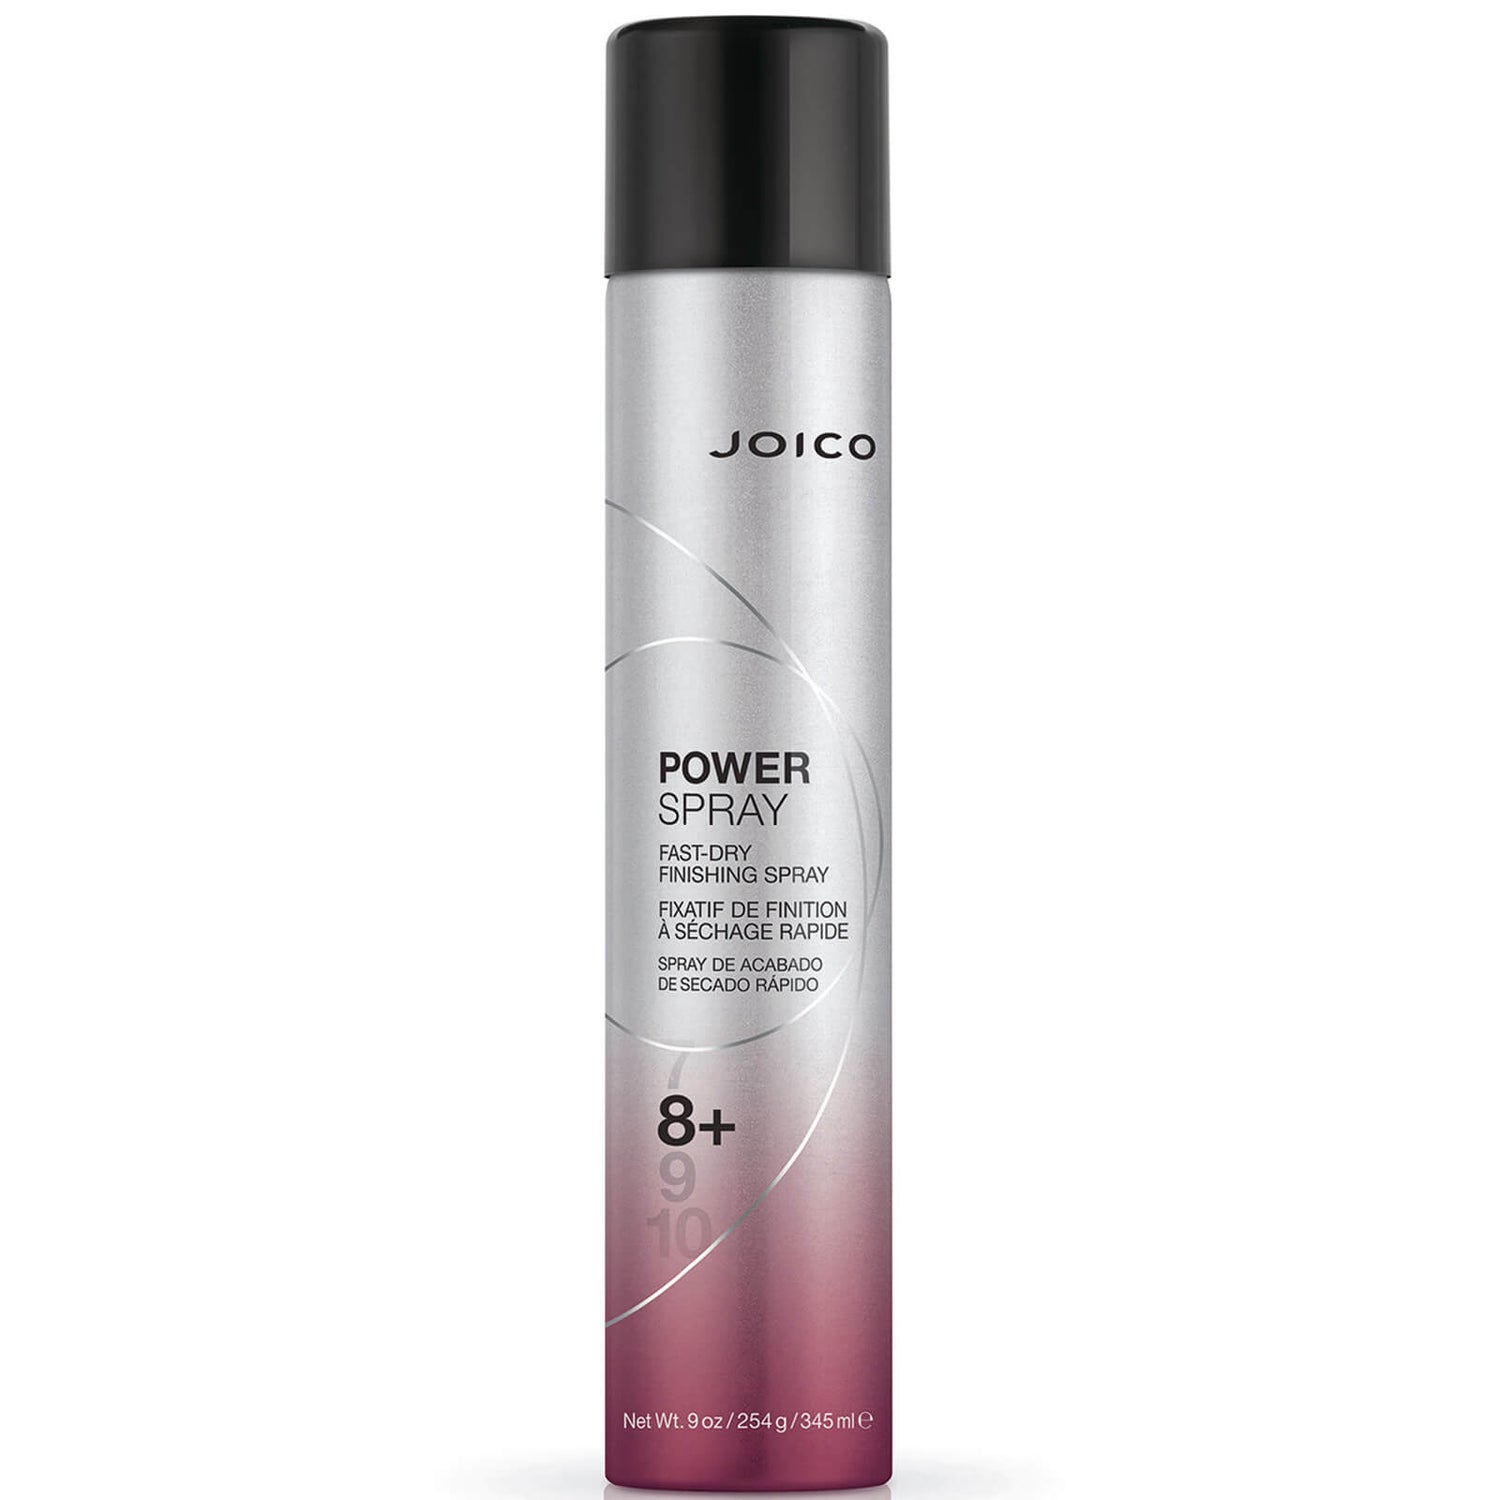 Joico Power Spray (300ml)